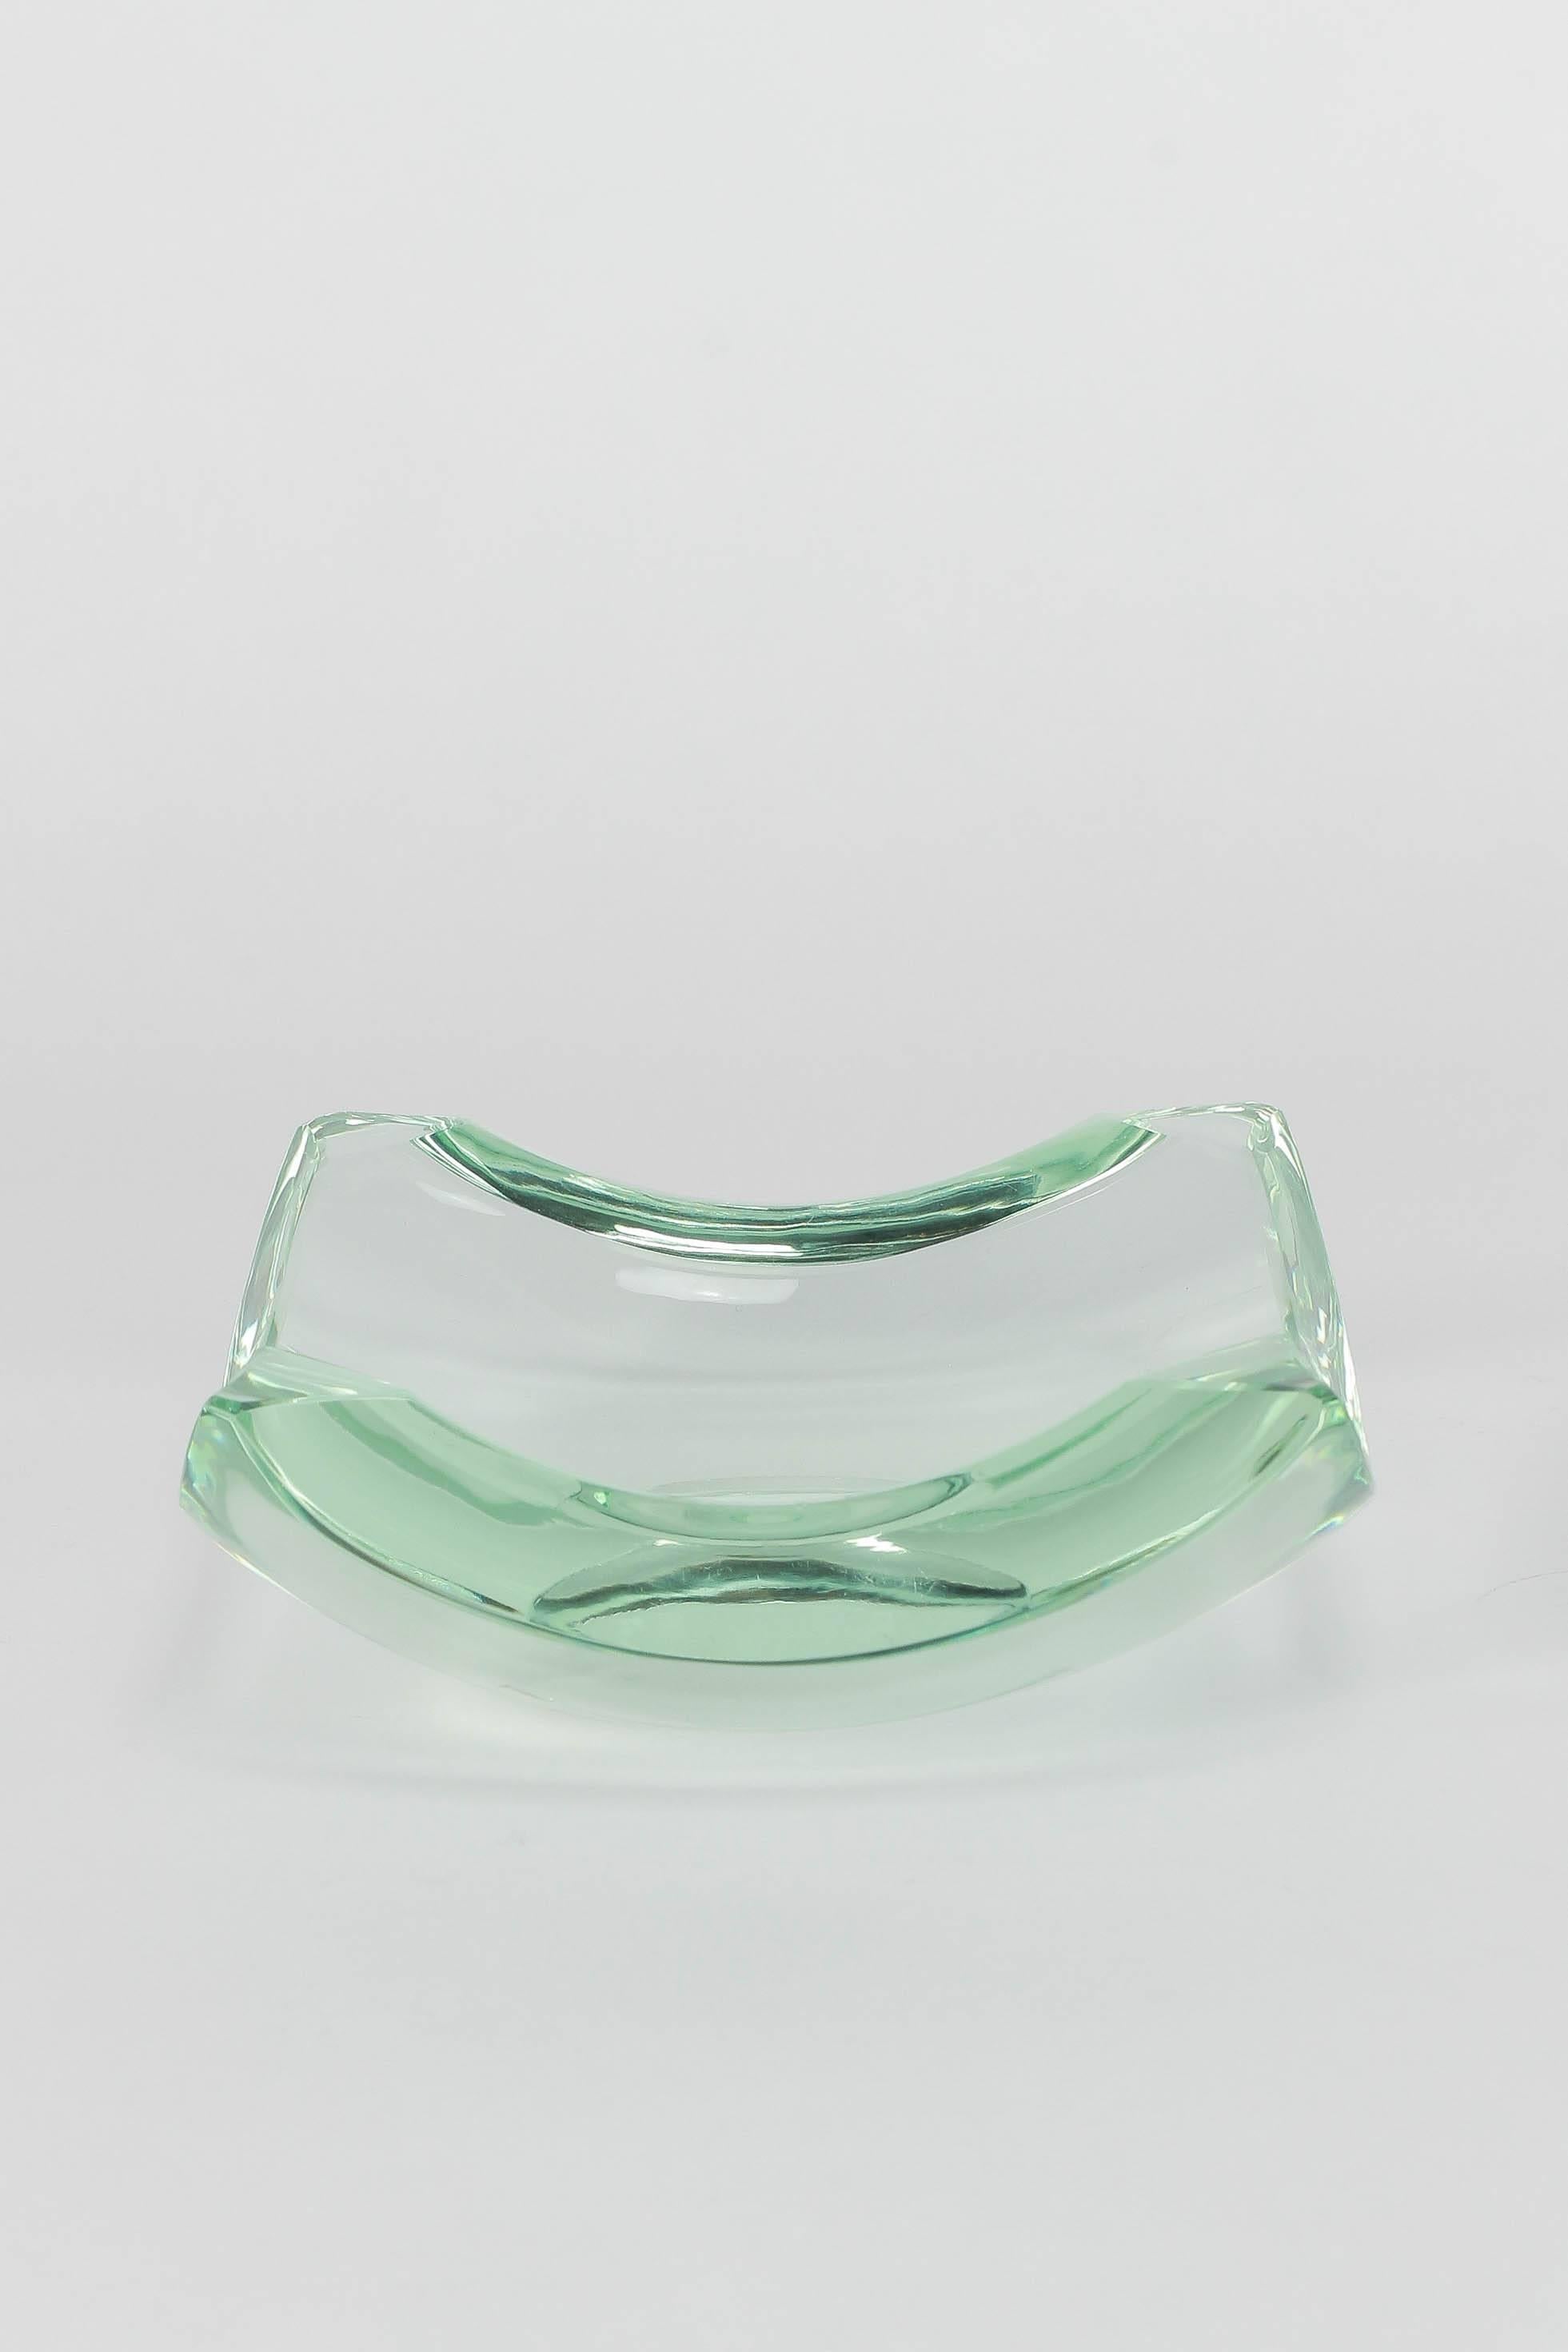 Mid-Century Modern Erwin Burger for Fontana Arte Glass Ashtray or Bowl, 1950